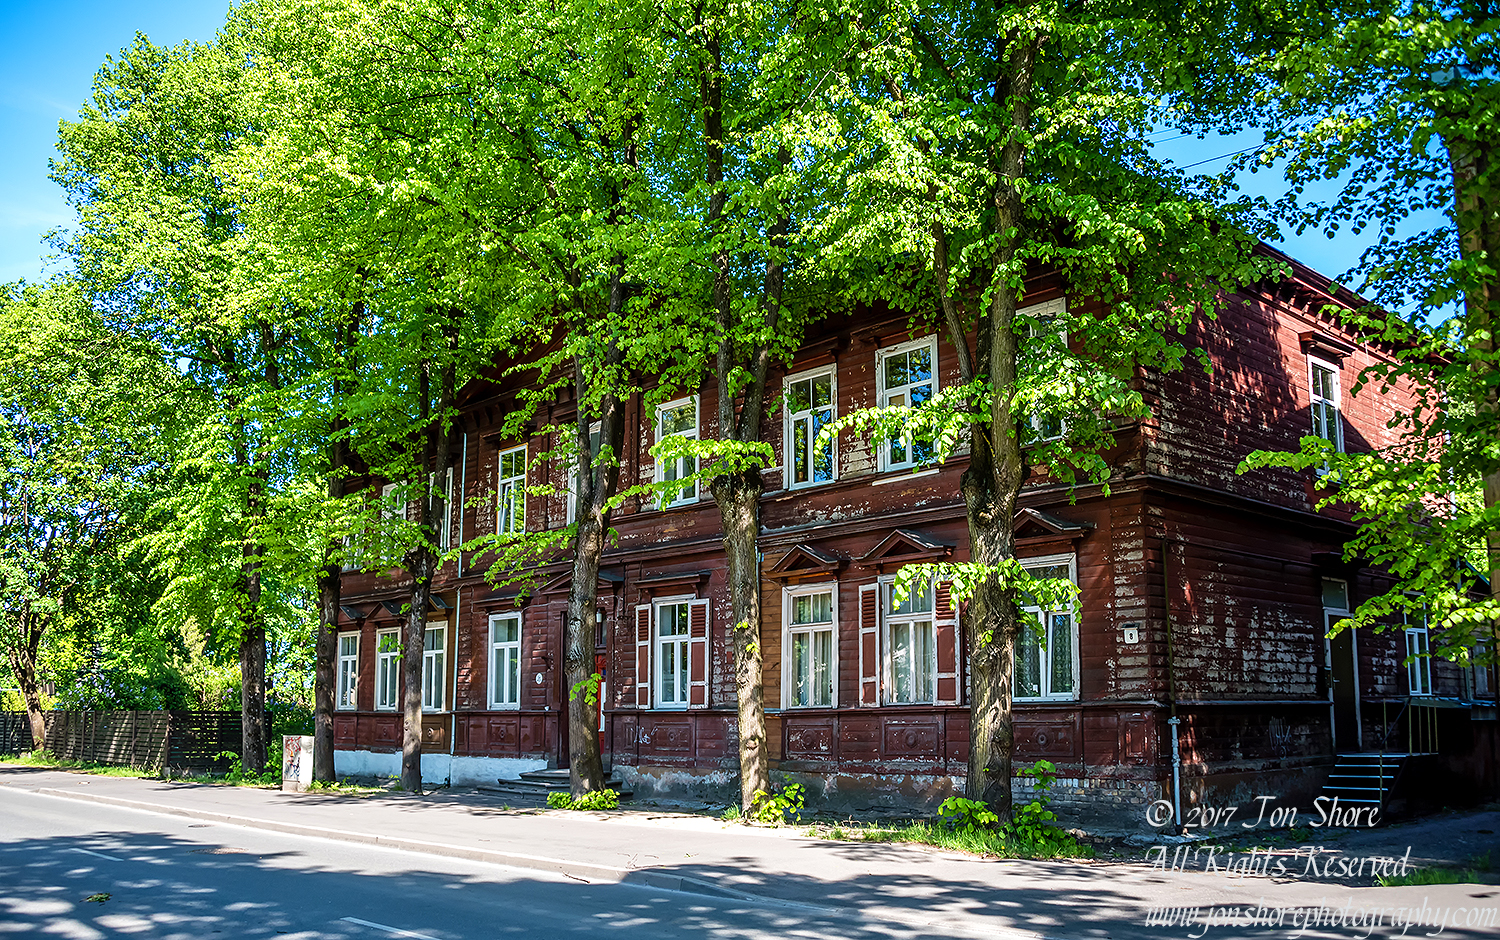 Old Riga Latvia Wooden House Spring 2017 by Jon Shore. Nikkor 28mm